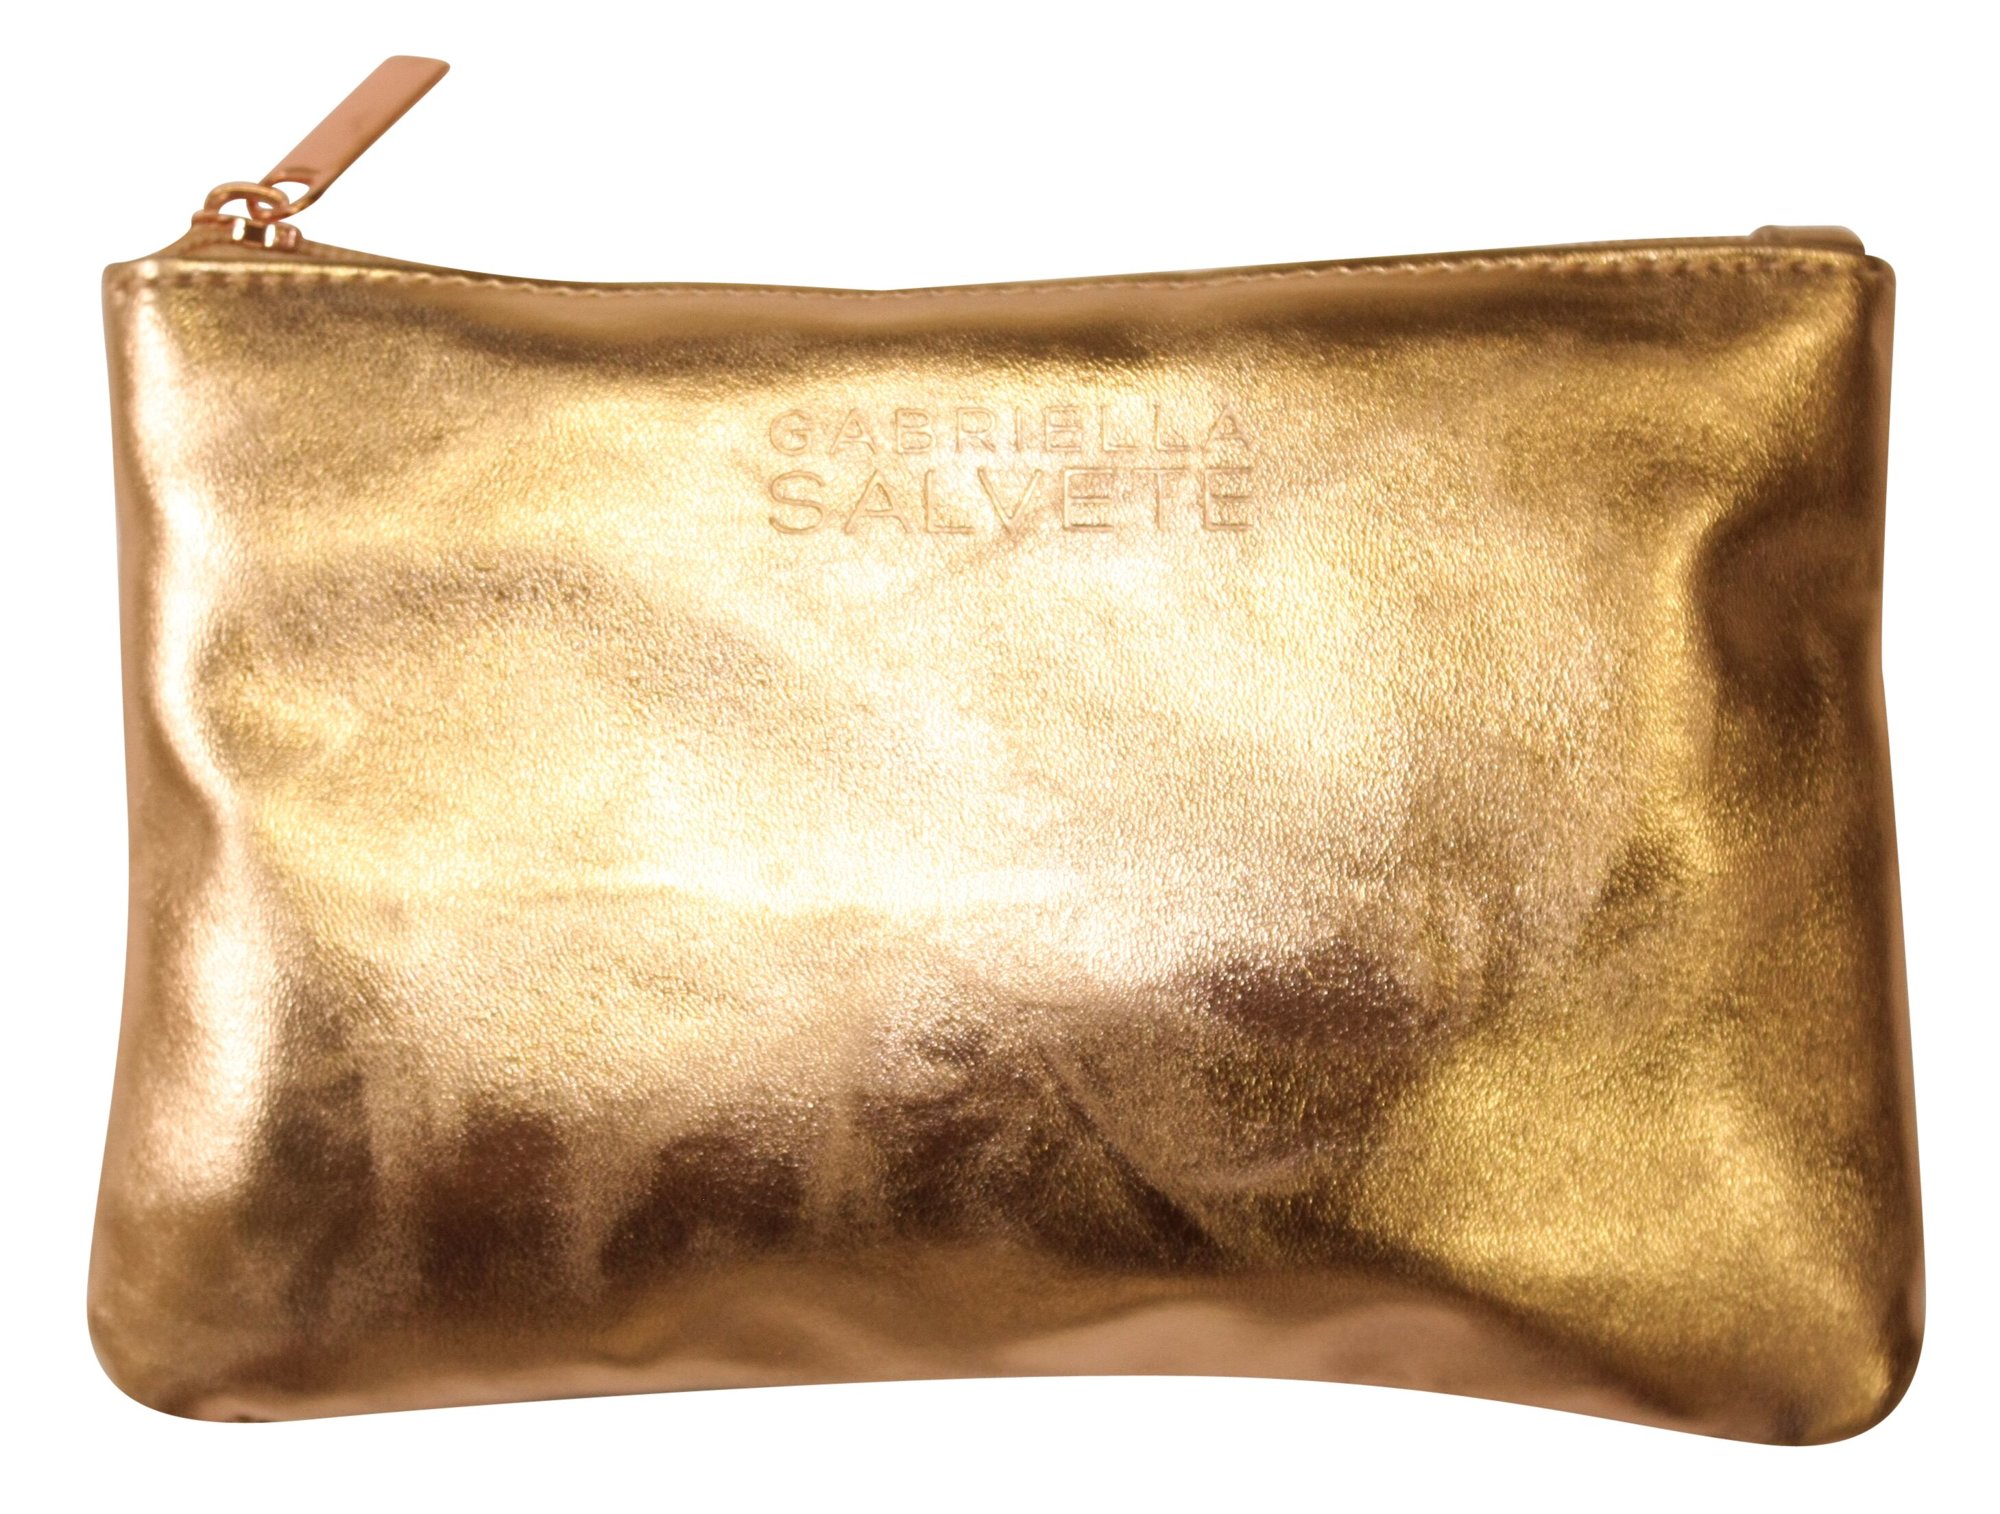 Gabriella Salvete TOOLS Cosmetic Bag Rose Gold kosmetinė